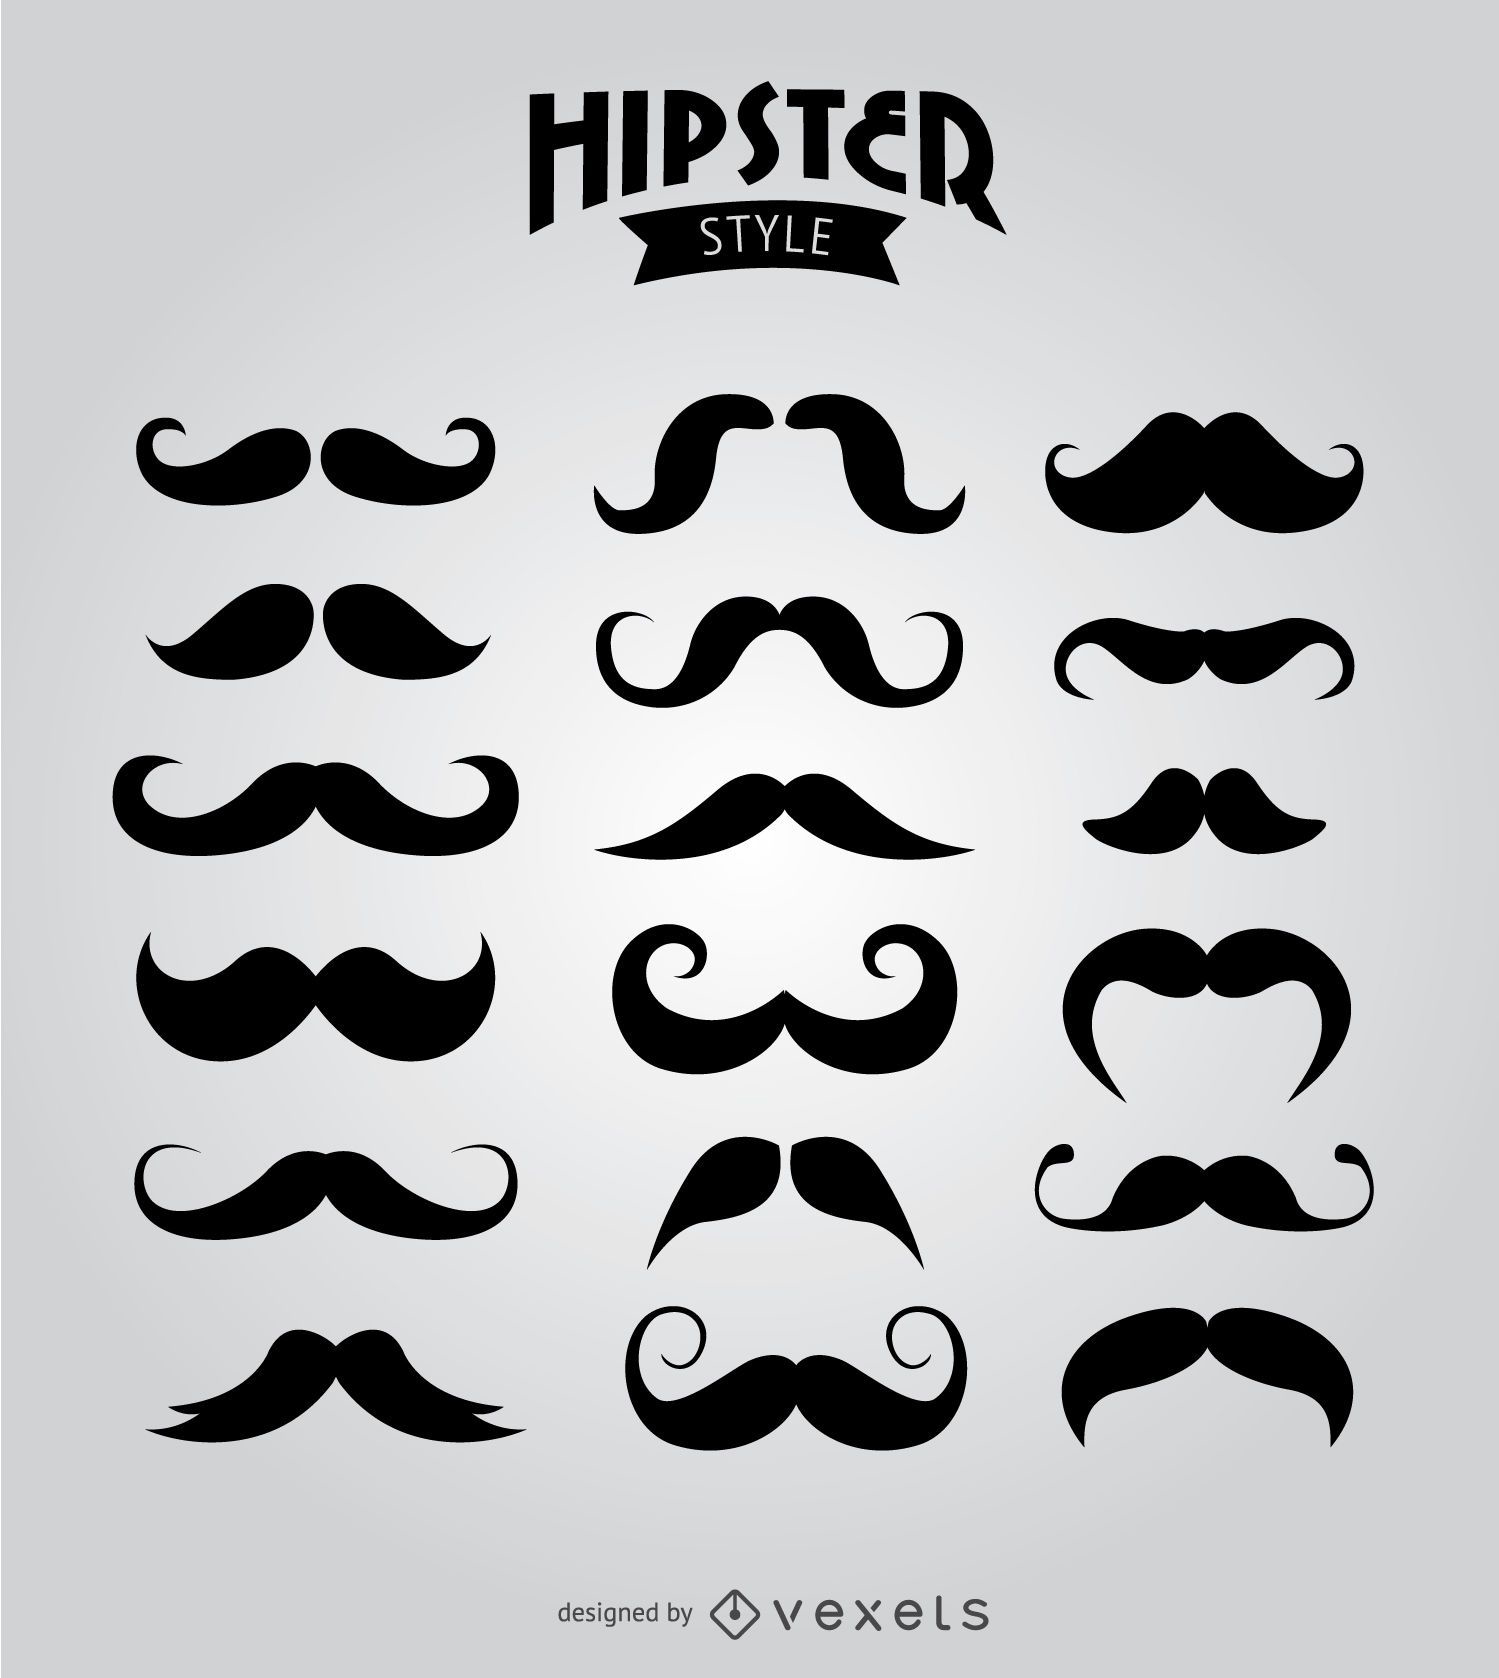 18 bigotes hipster